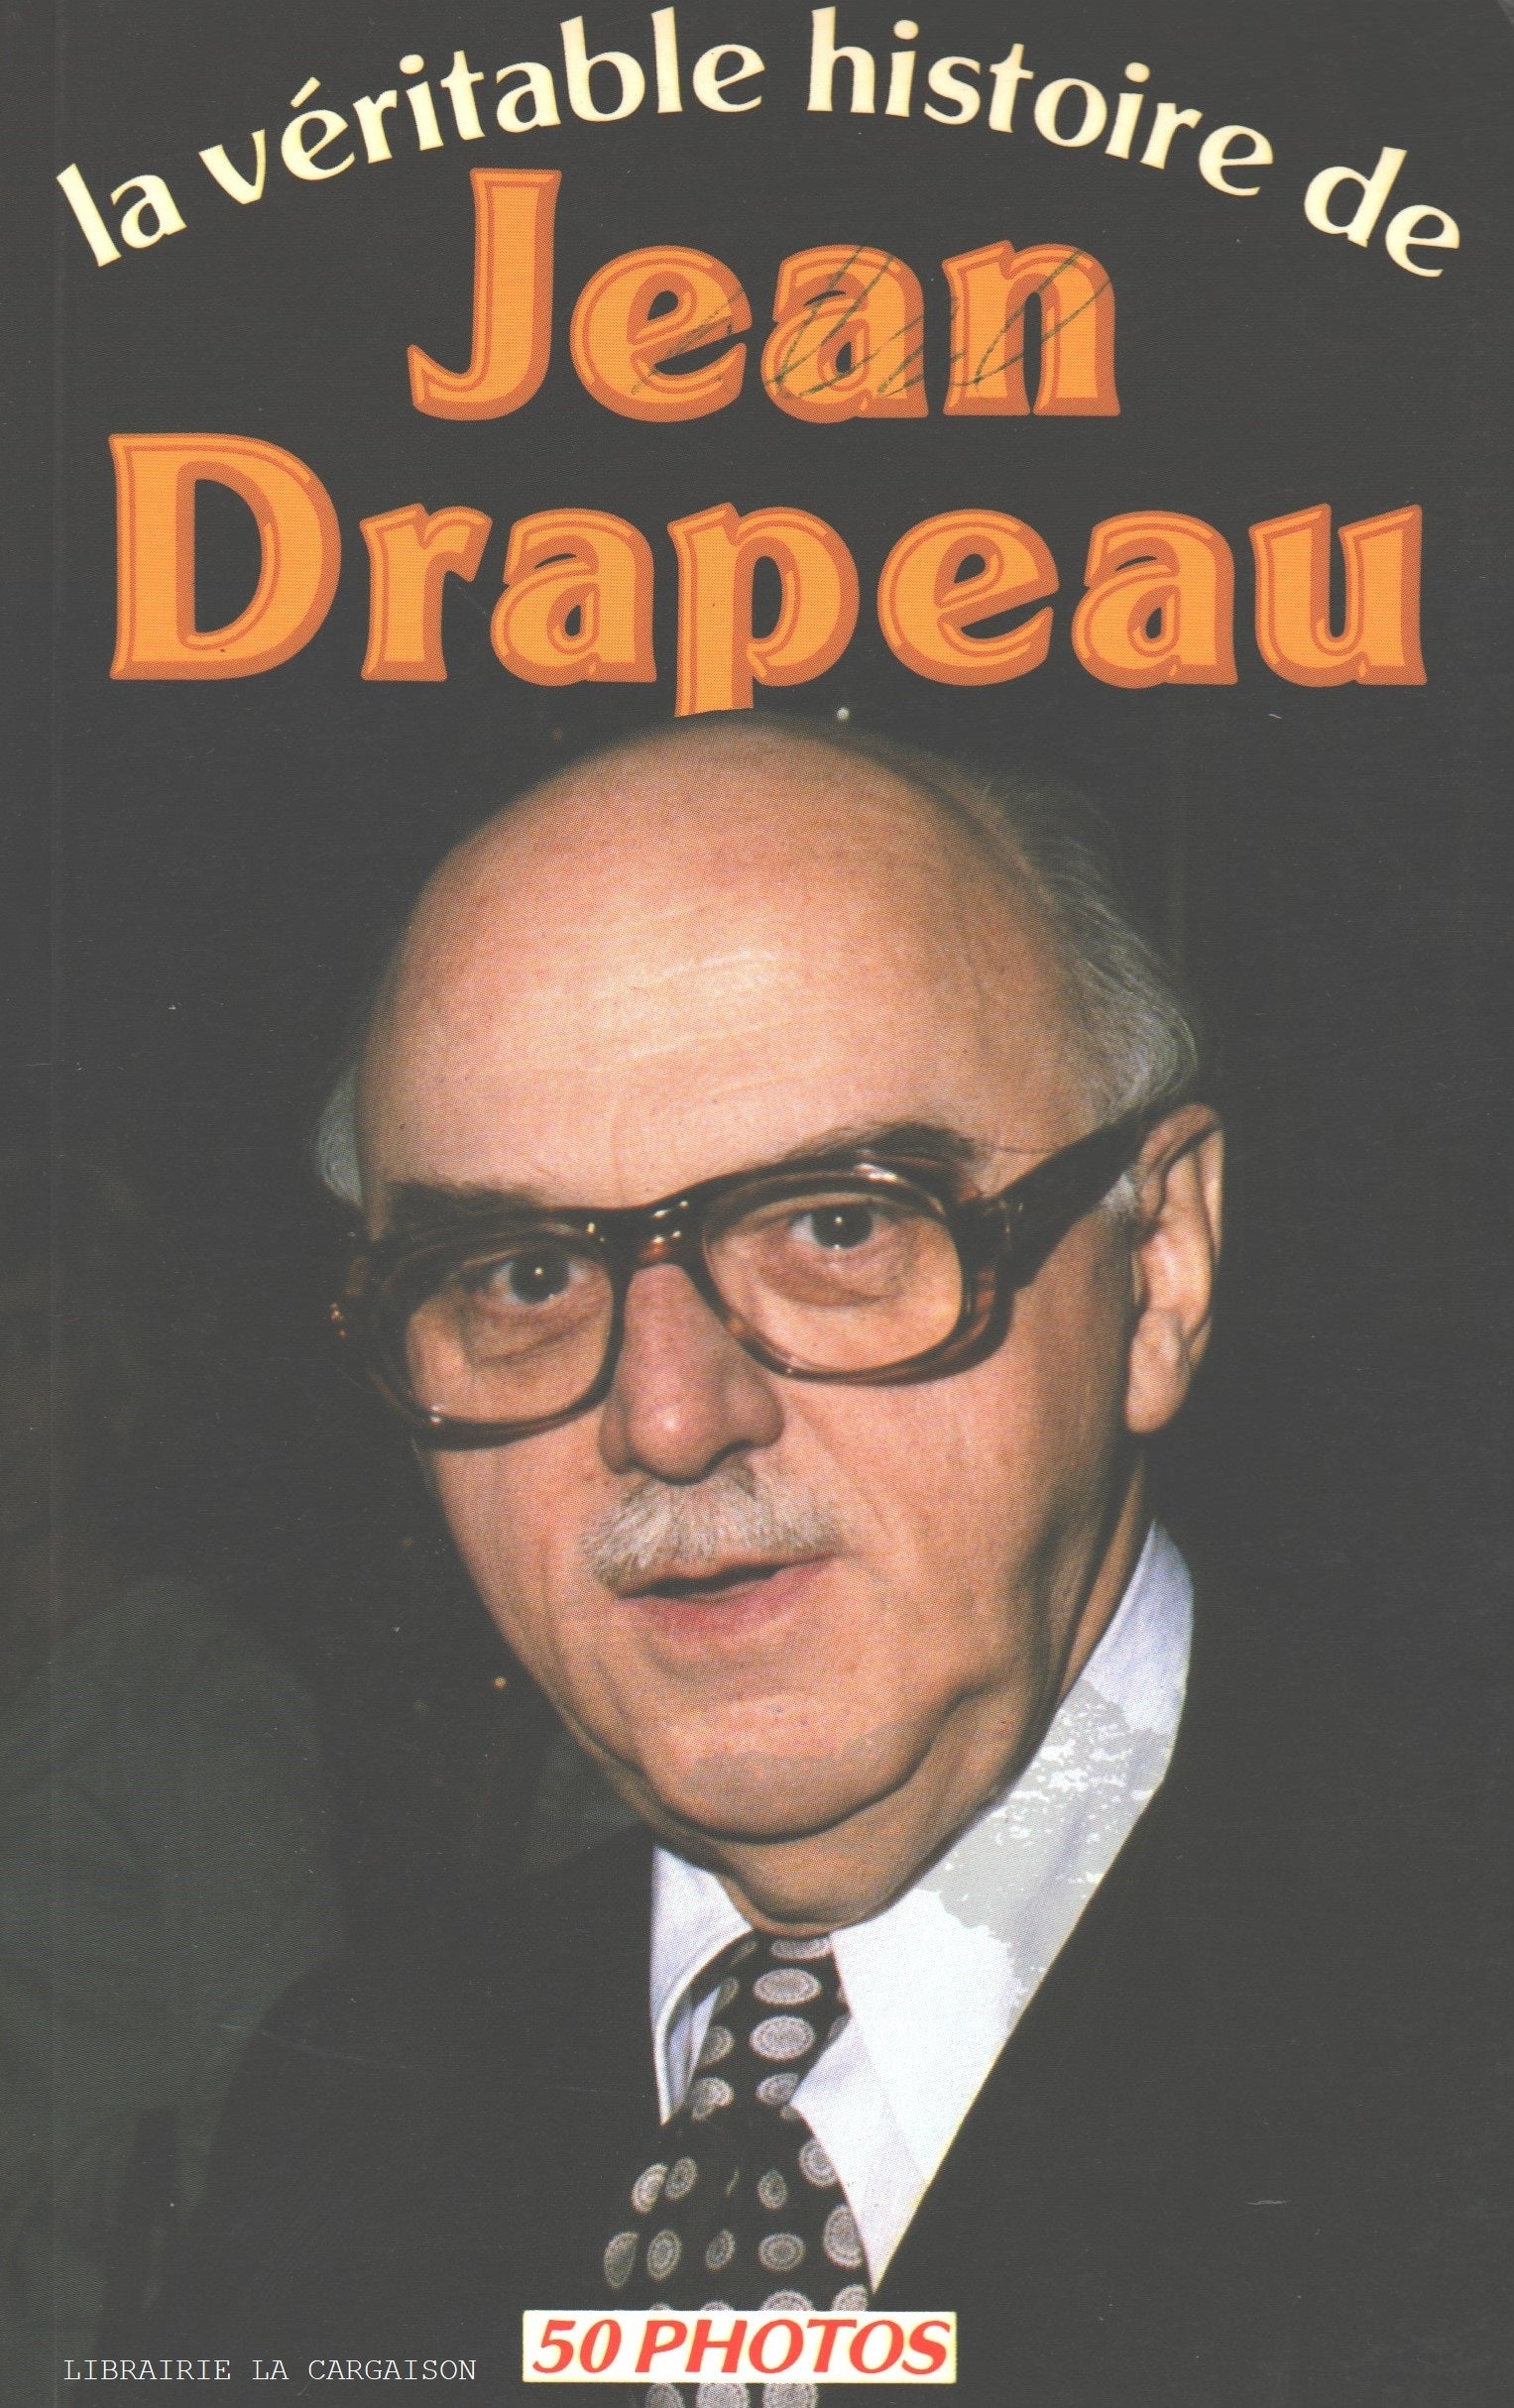 DRAPEAU, JEAN. Véritable histoire de Jean Drapeau (La)